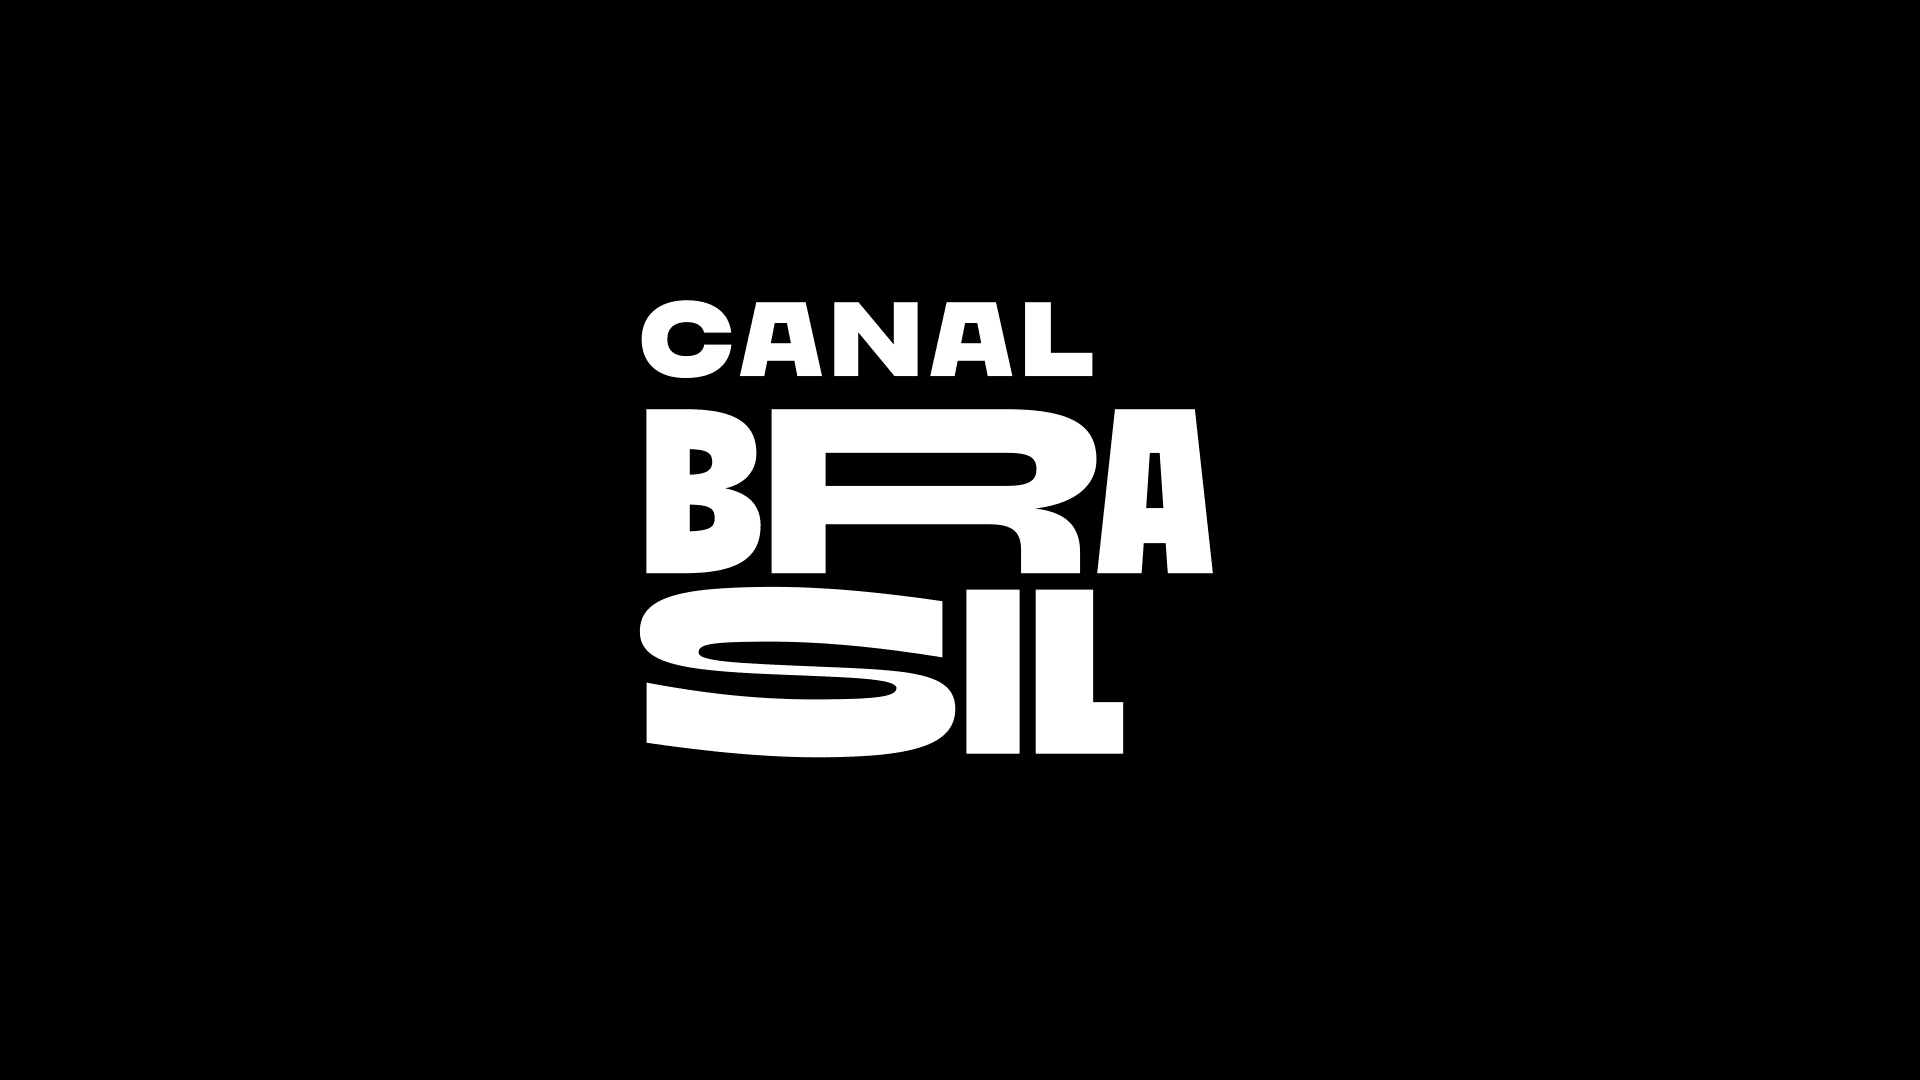 〔 〕 Canal 6h05t51n15t3r - Só Brasil - Guilded